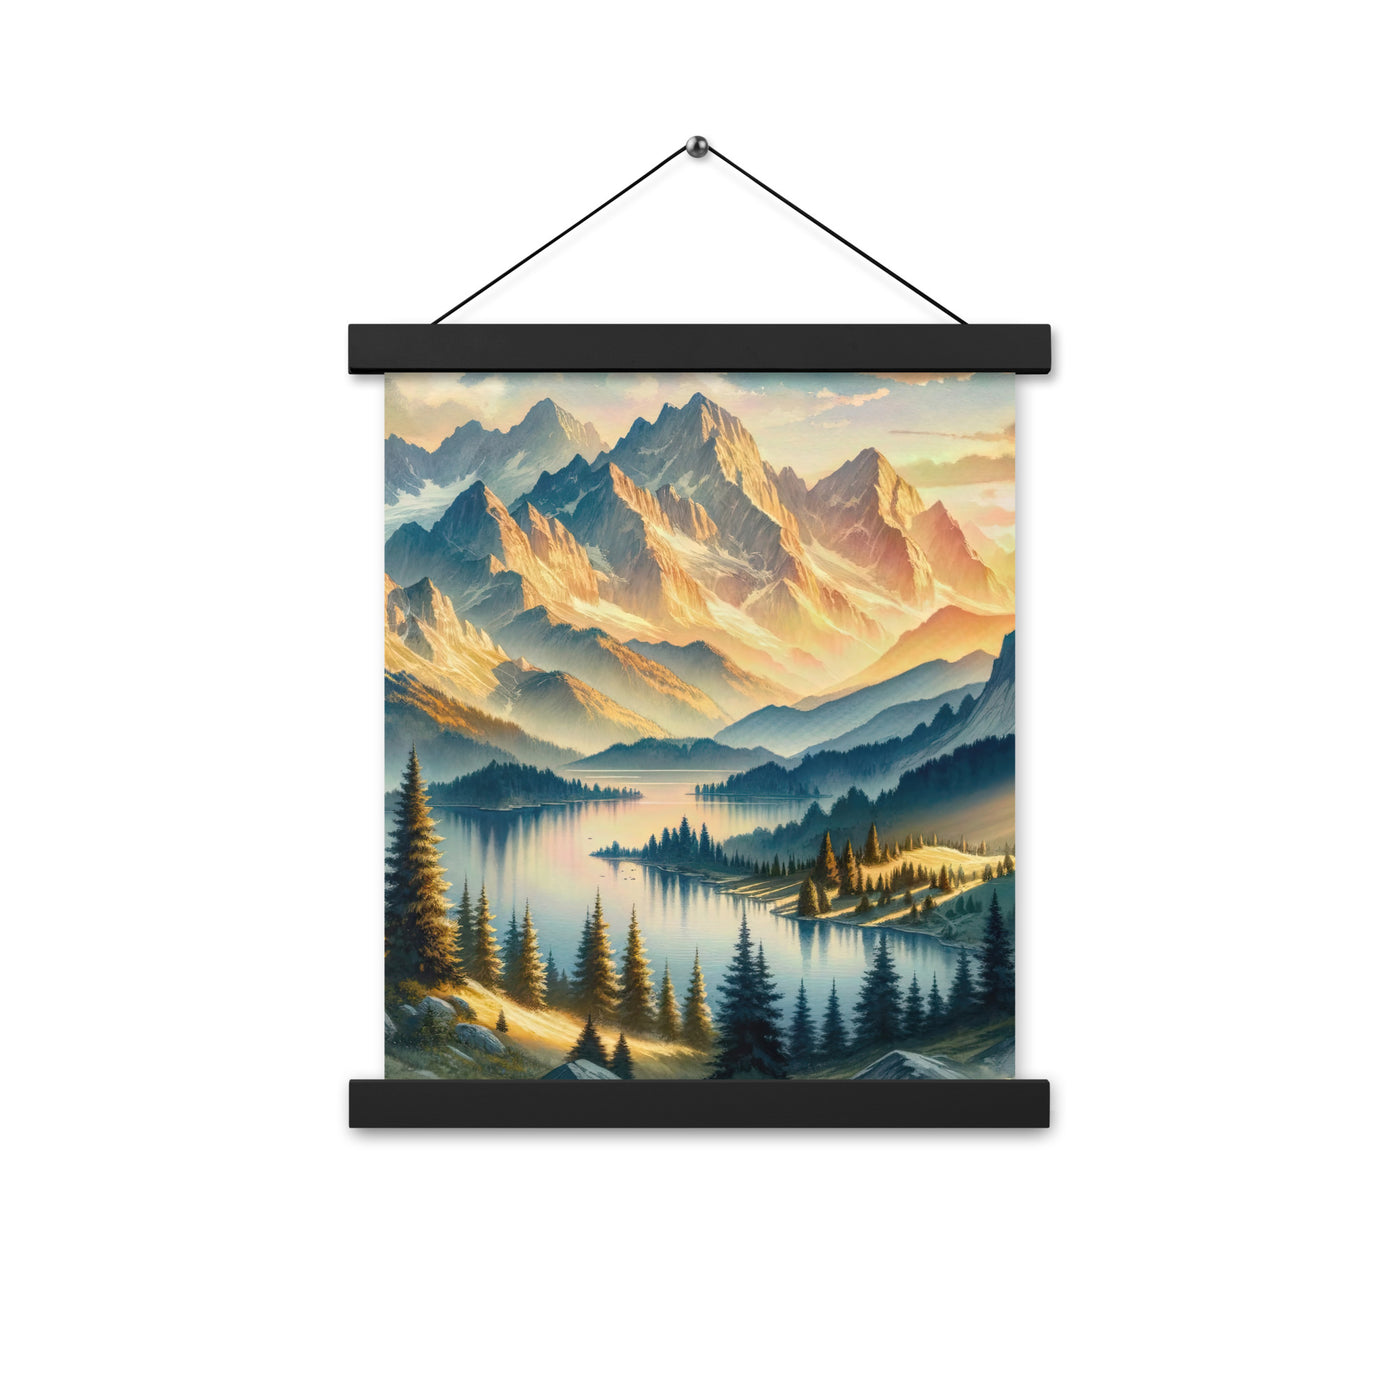 Aquarell der Alpenpracht bei Sonnenuntergang, Berge im goldenen Licht - Premium Poster mit Aufhängung berge xxx yyy zzz 27.9 x 35.6 cm